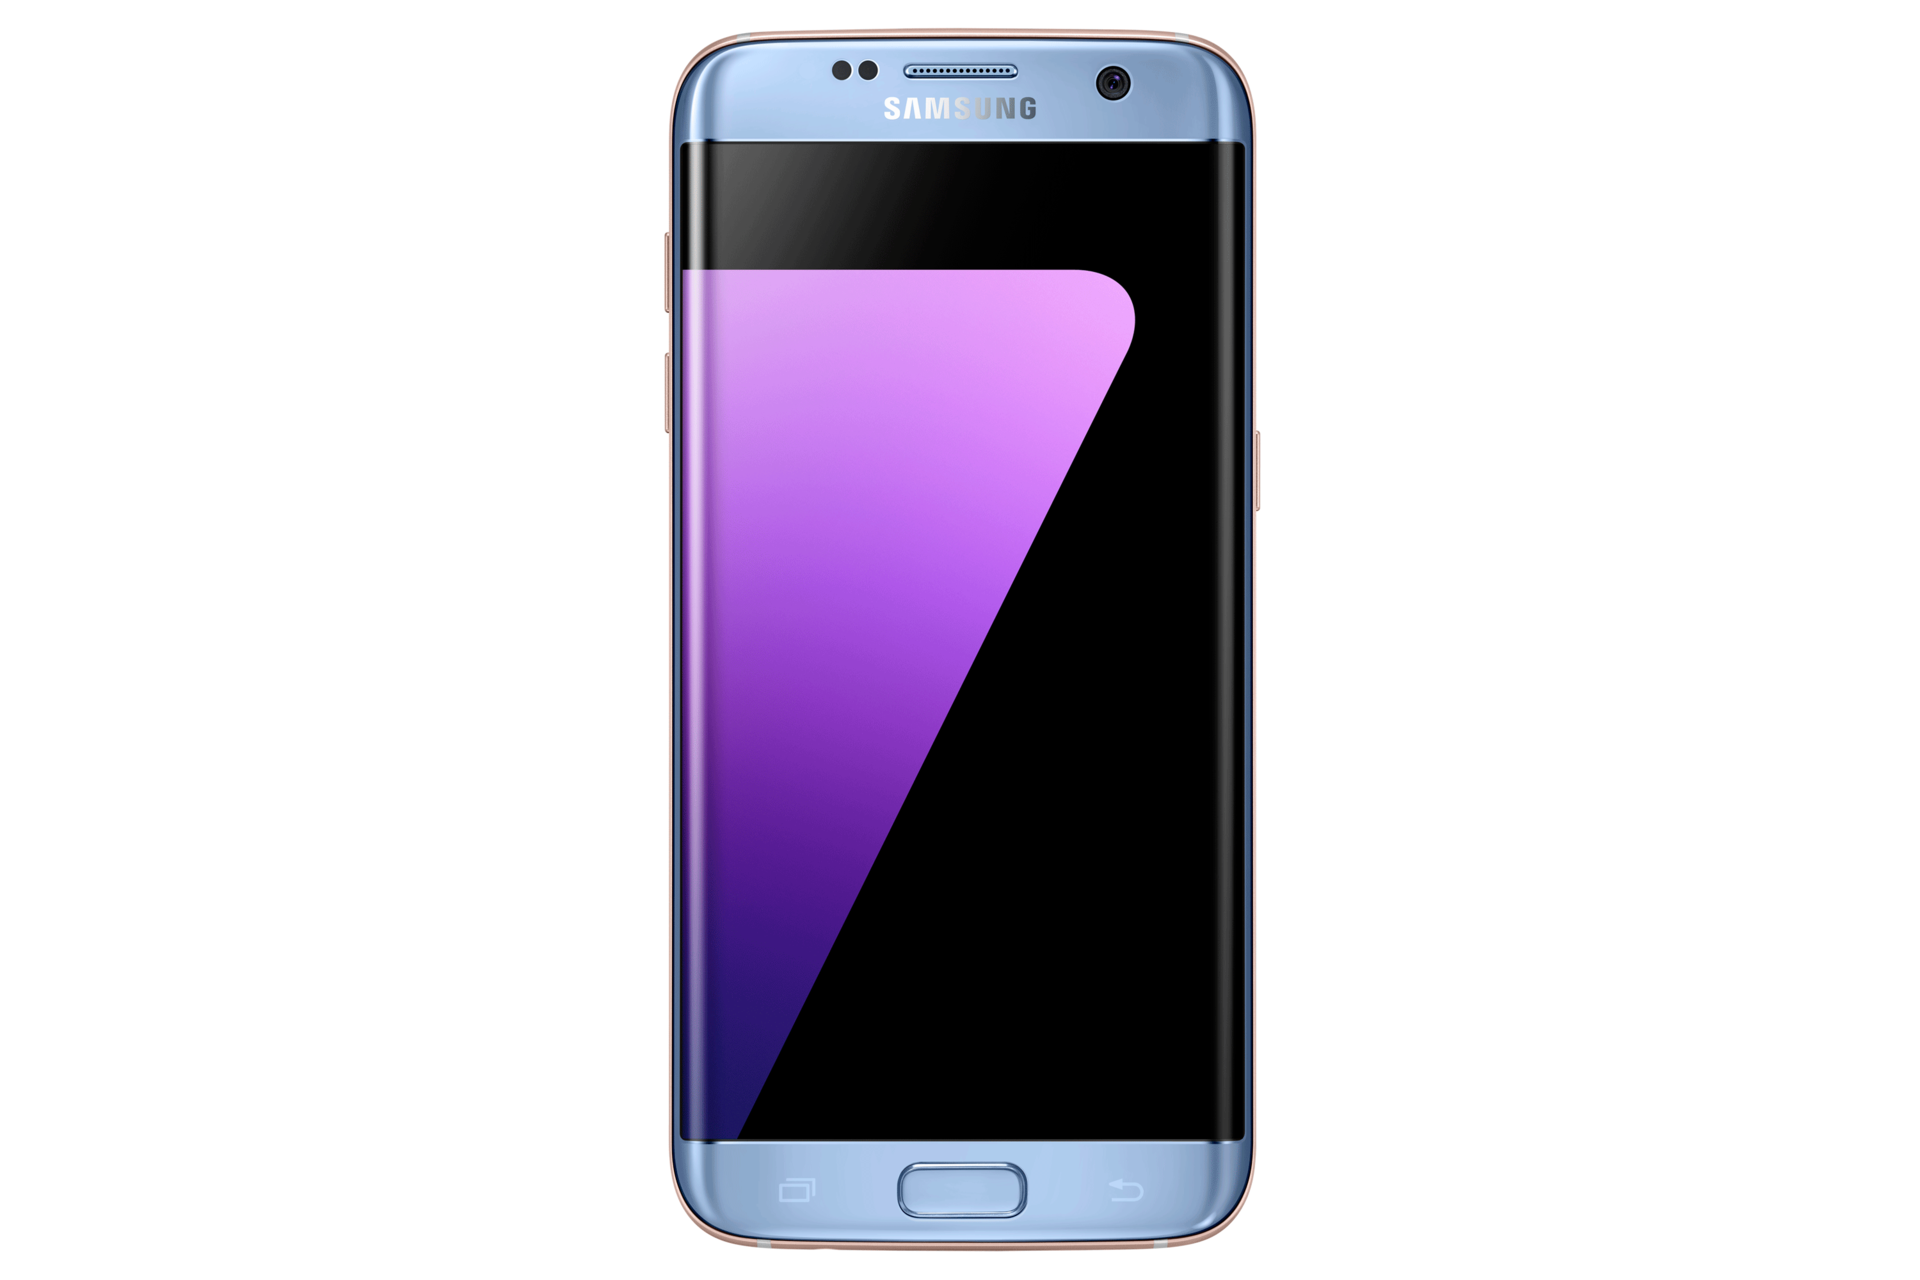 Cara Install Twrp Samsung Galaxy S7 Dan S7 Edge Nougat